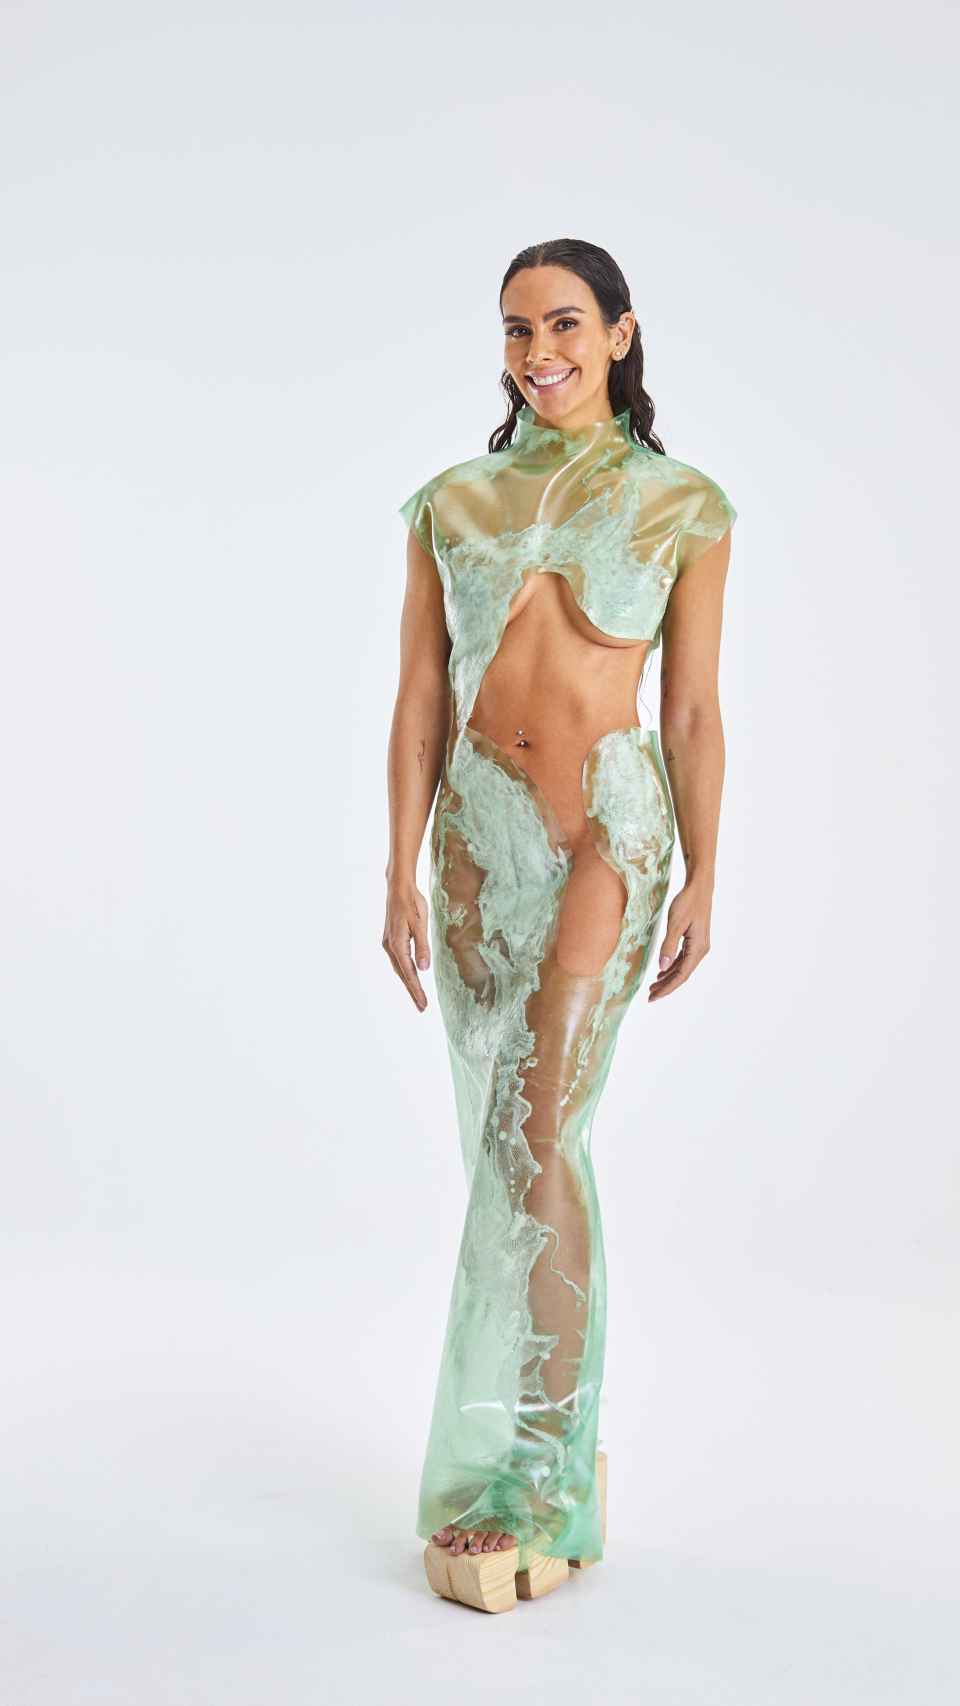 El vestido inspirado una ninfa fluvial de Cristina Pedroche.